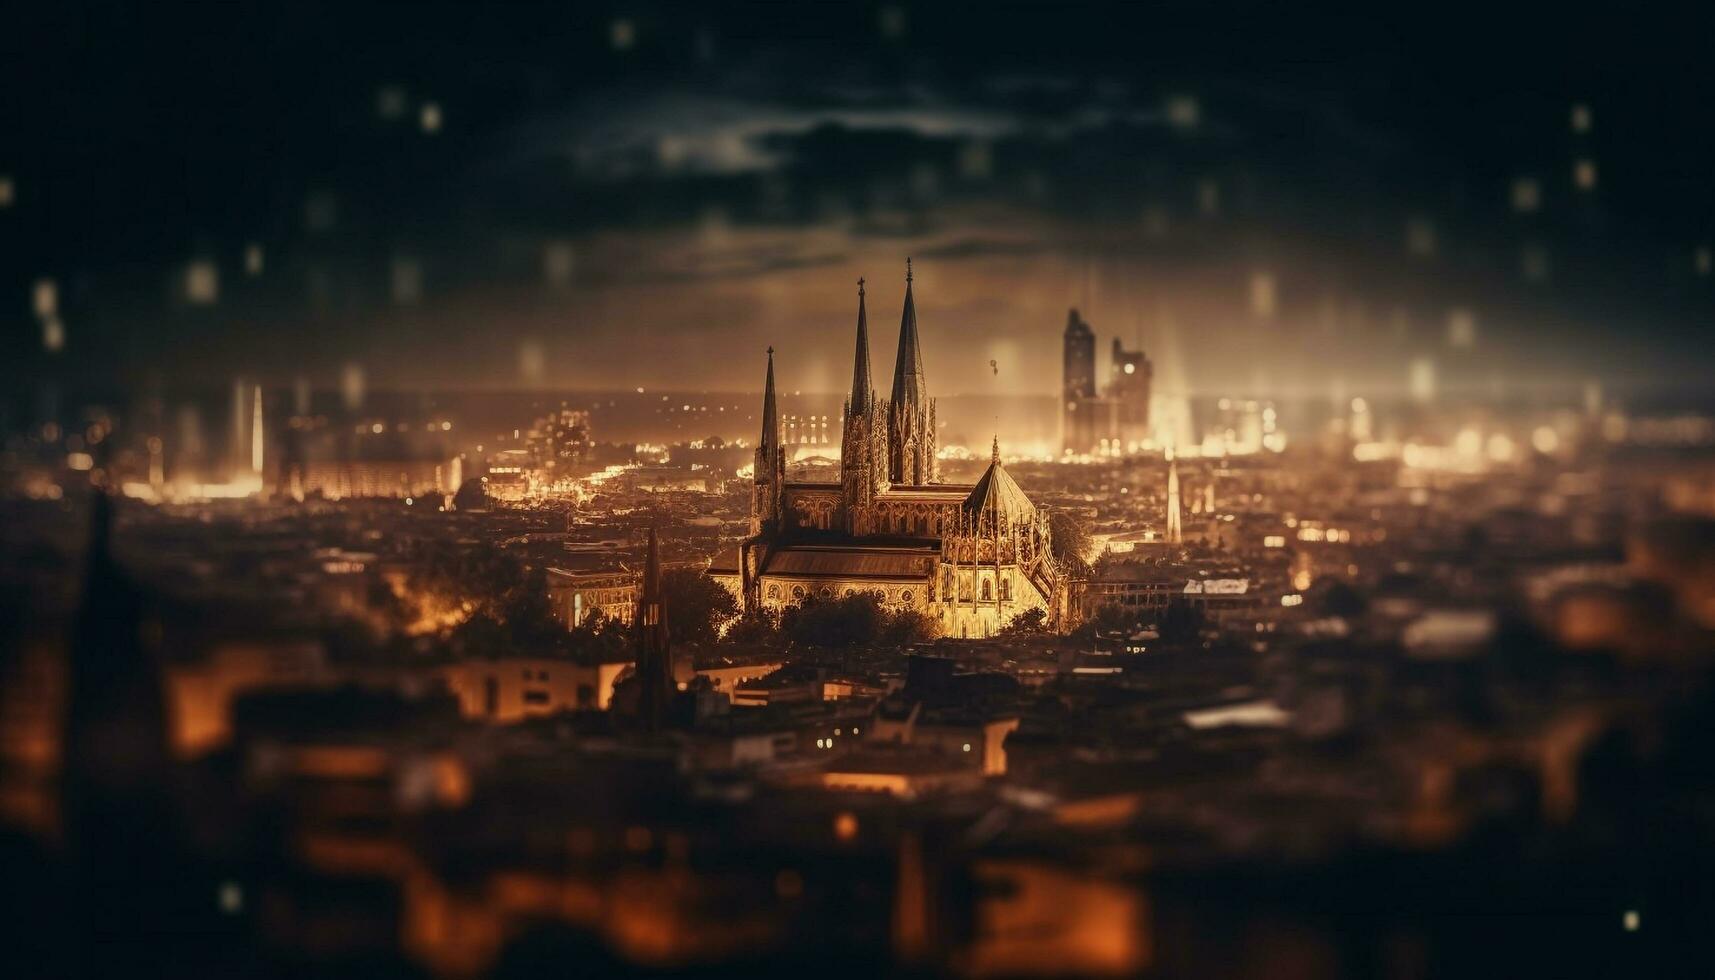 The city skyline illuminated by night lighting equipment generated by AI photo